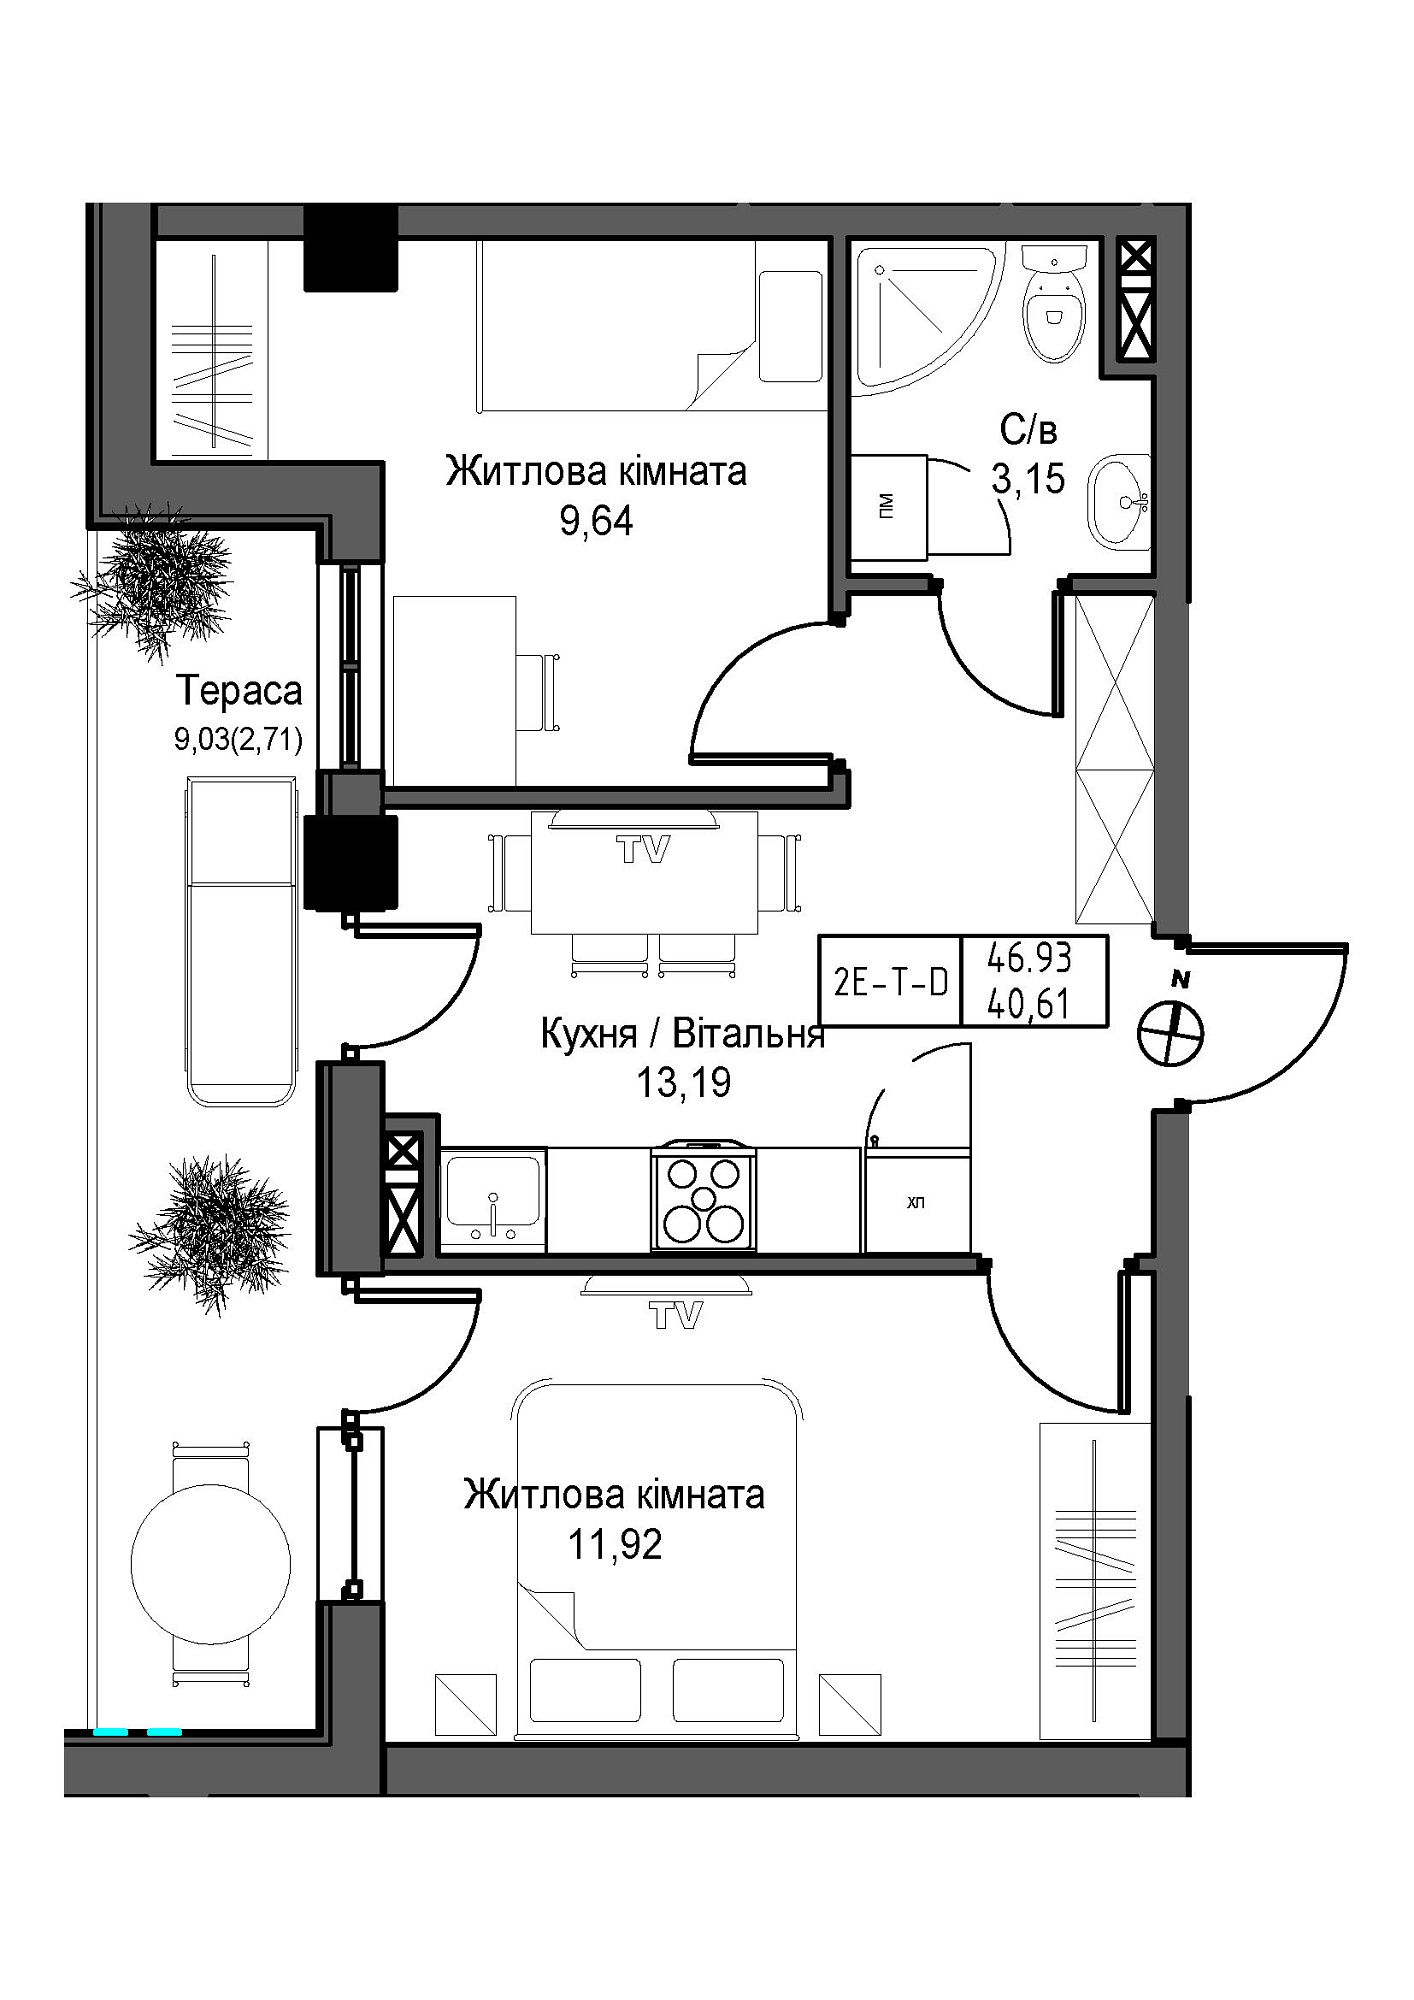 Планування 2-к квартира площею 40.61м2, UM-007-04/0001.